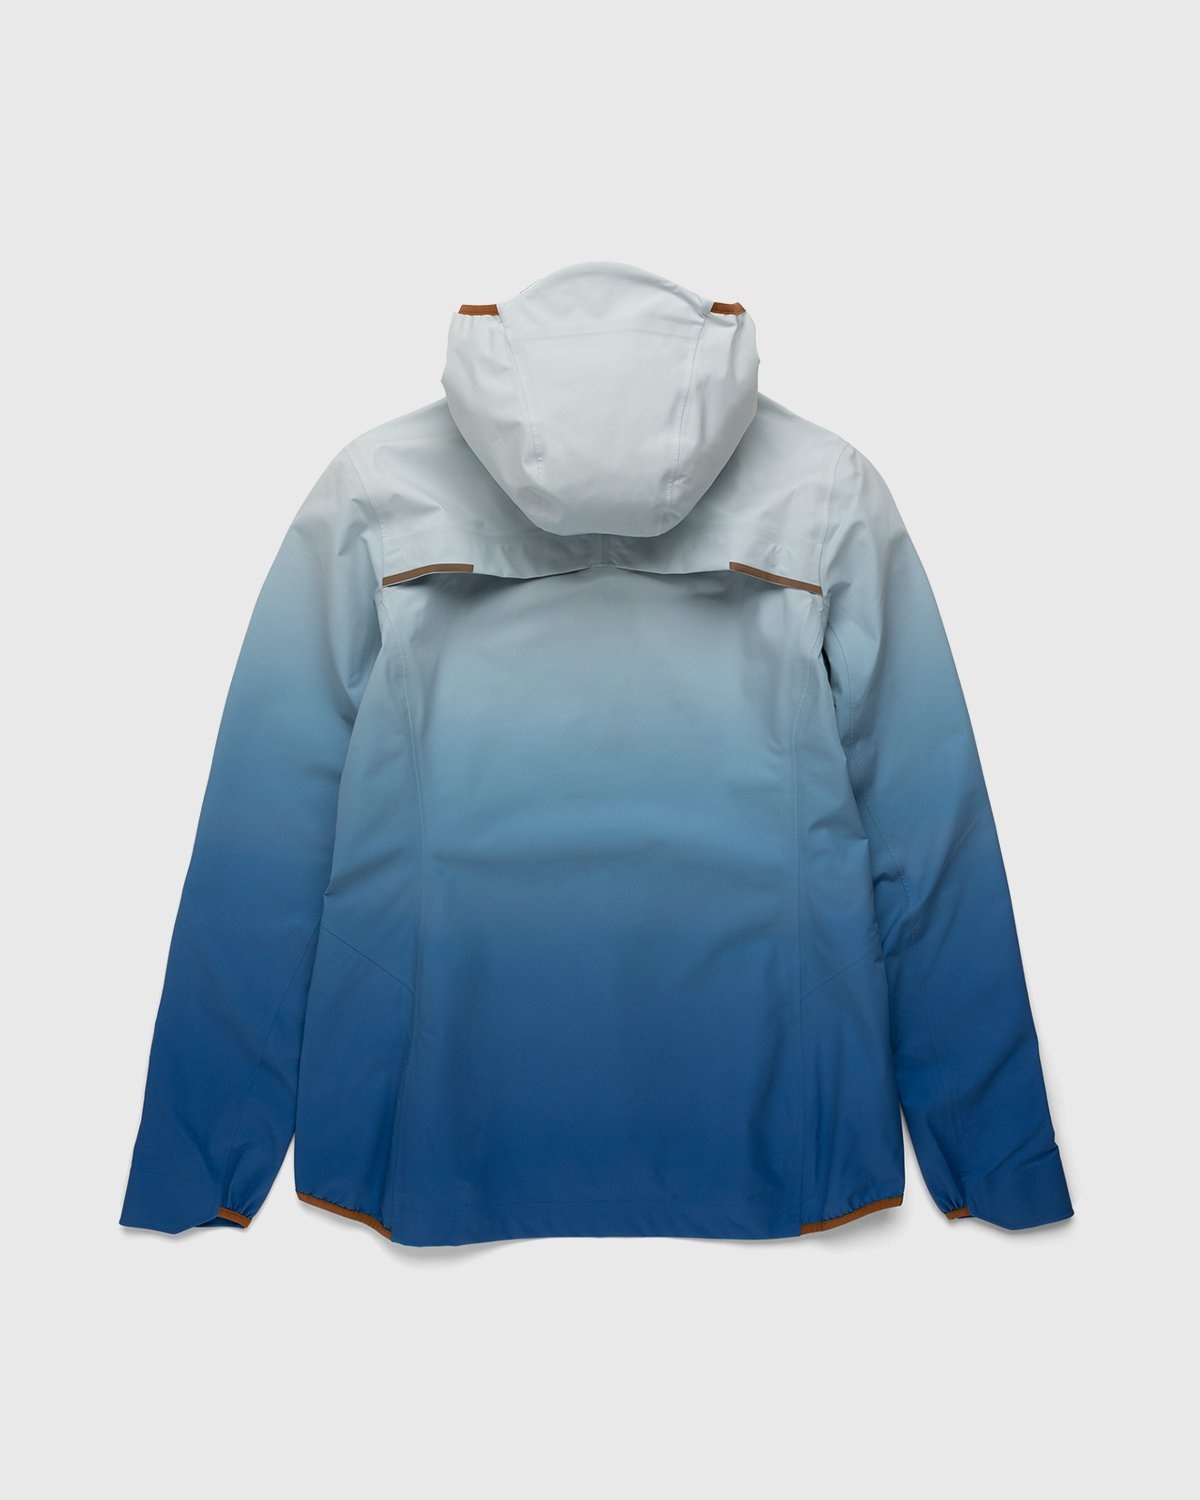 Loewe x On – Men's Technical Waterproof Anorak Gradient Khaki - Outerwear - Grey - Image 2